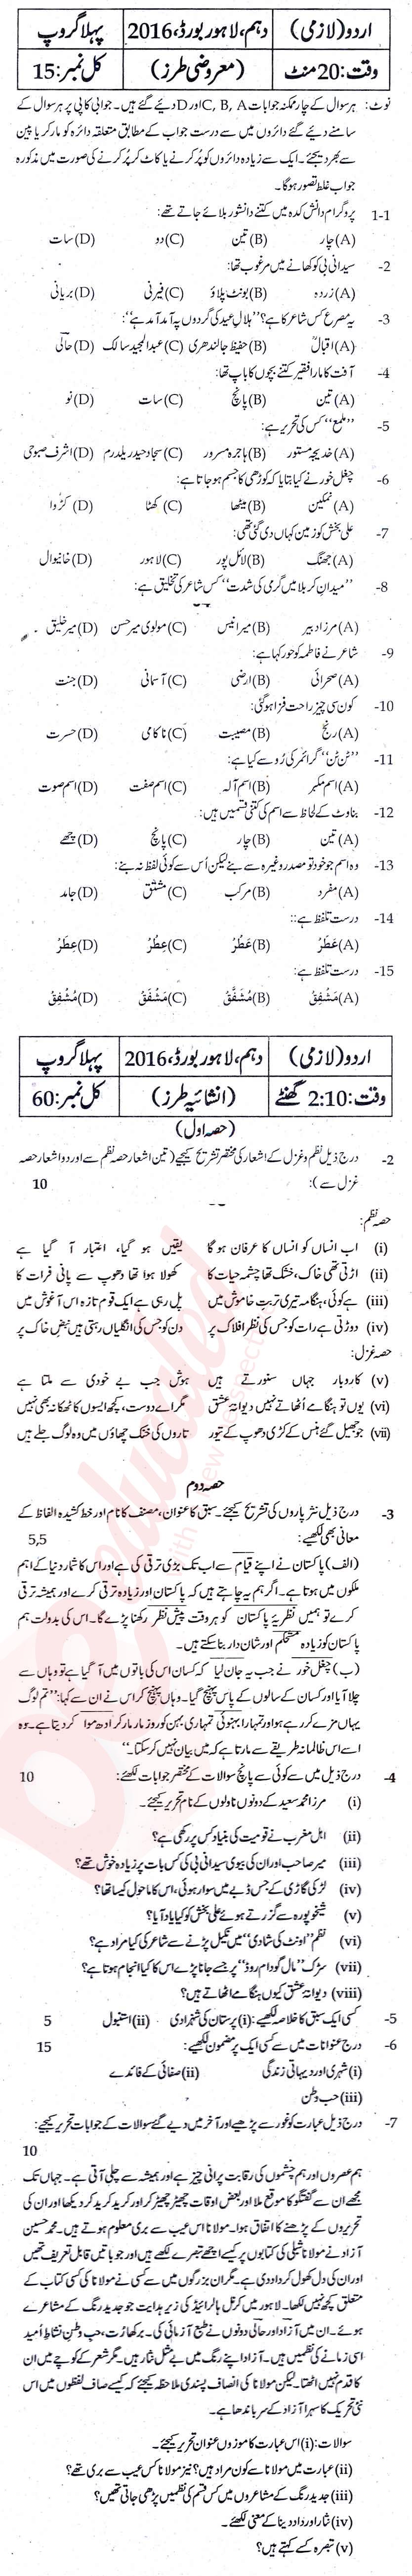 Urdu 10th class Past Paper Group 1 BISE Lahore 2016